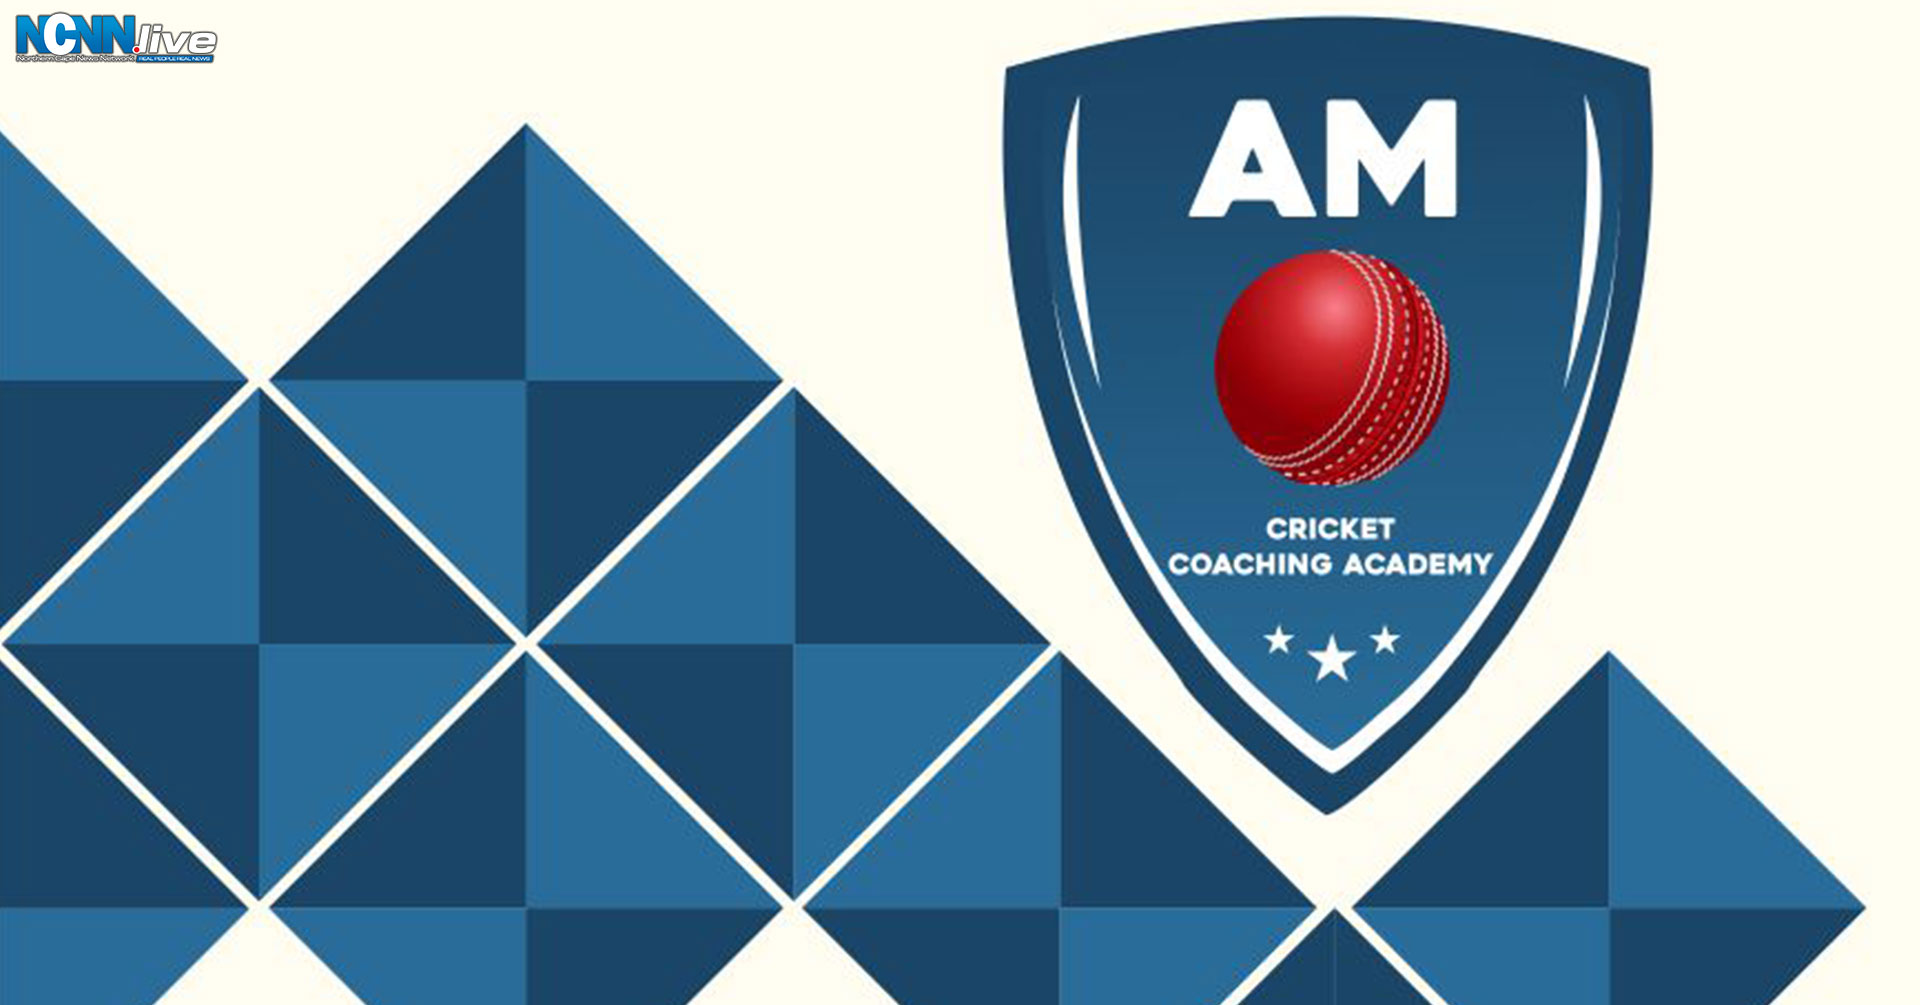 AM_Cricket_Coaching_Academy-FI